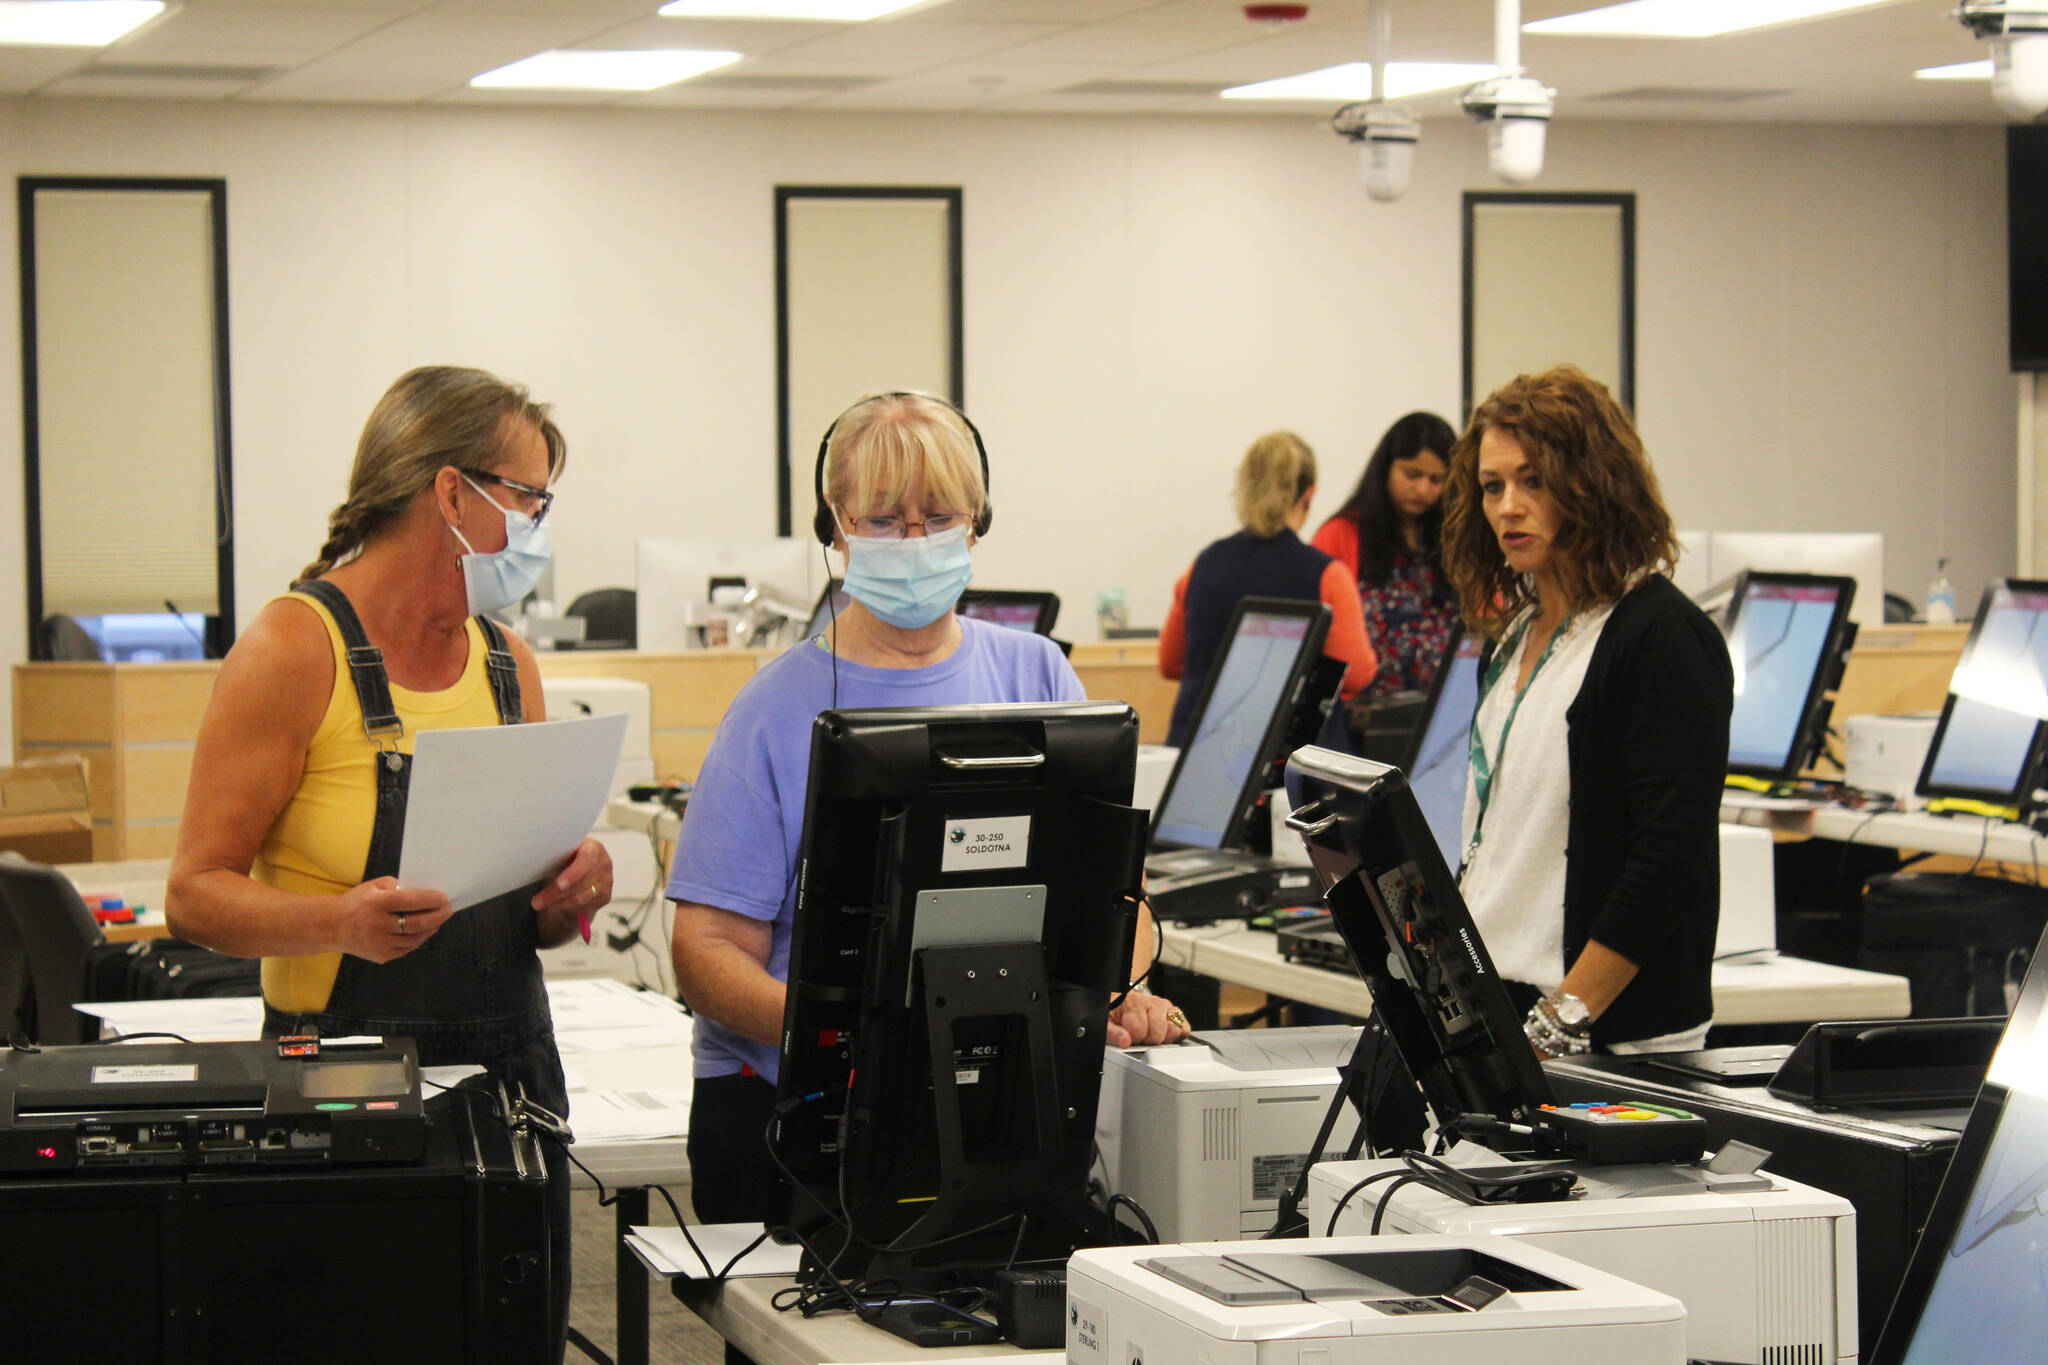 Kenai Peninsula Borough Clerk Johni Blankenship oversees the testing of voting equipment ahead of the Oct. 5 municipal election on Thursday, Sept. 9, 2021 in Soldotna, Alaska. (Ashlyn O’Hara/Peninsula Clarion)